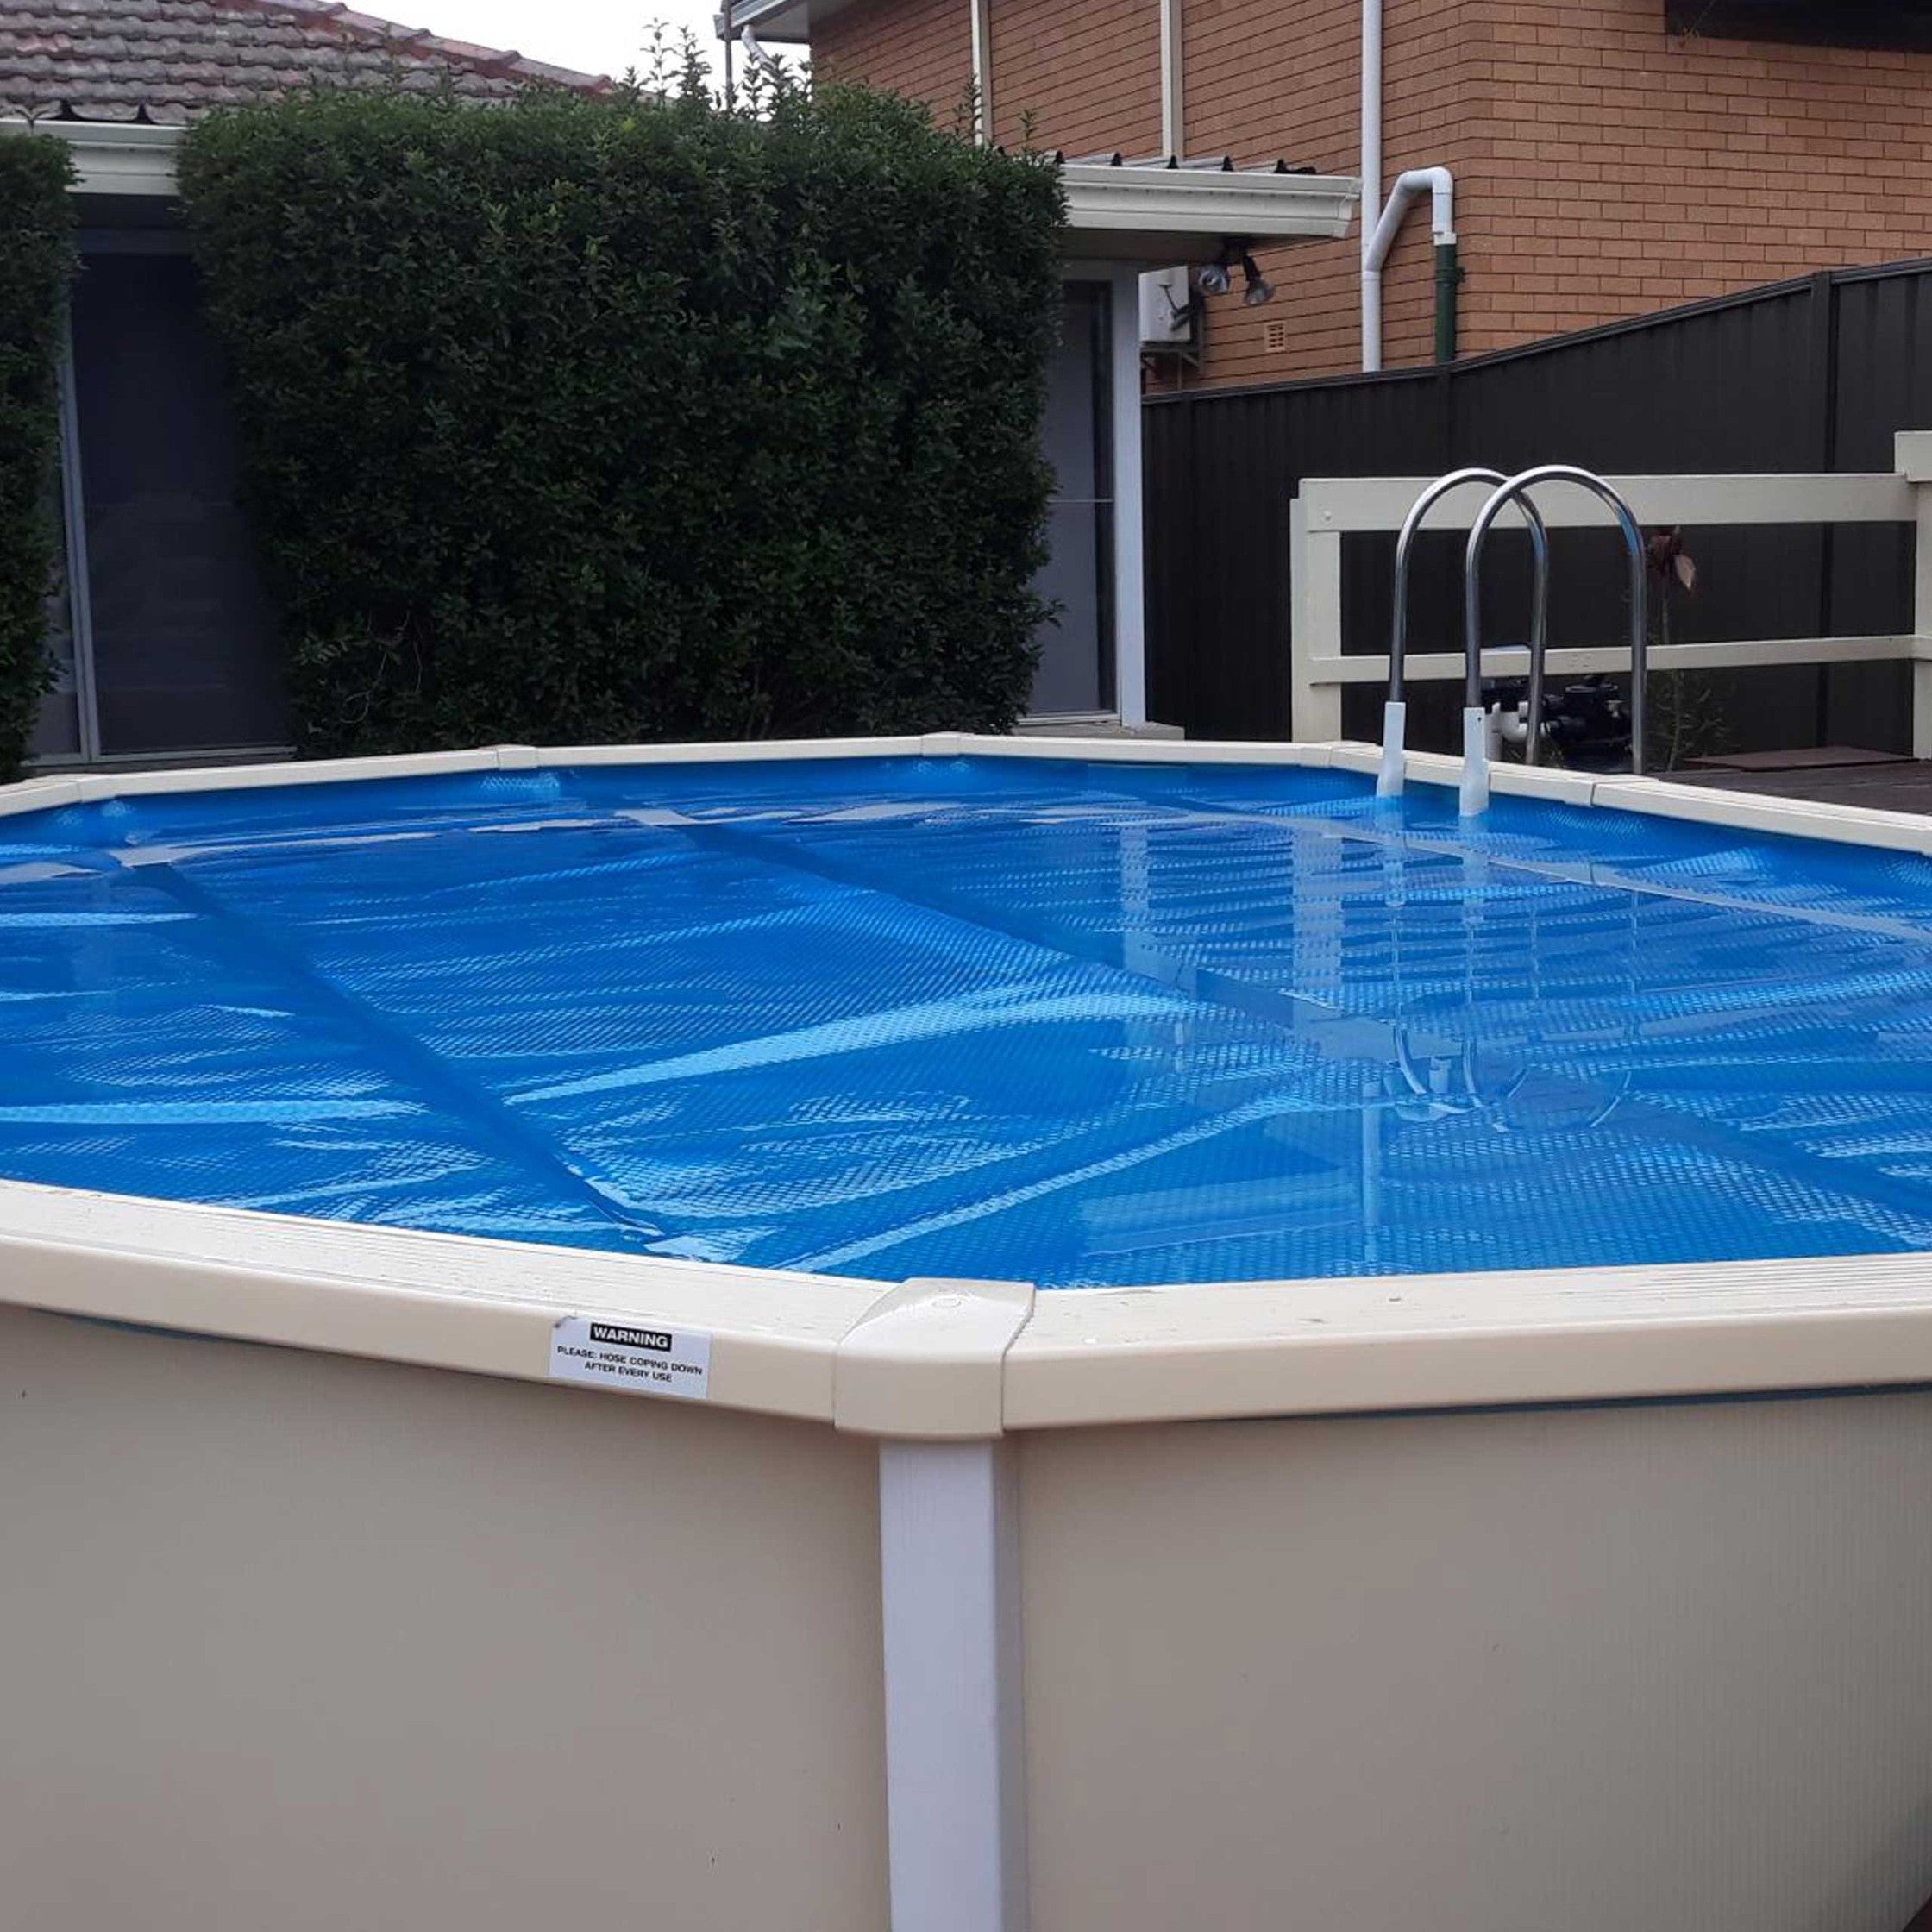 Daisy 250B Blue Solar Pool Cover per M2